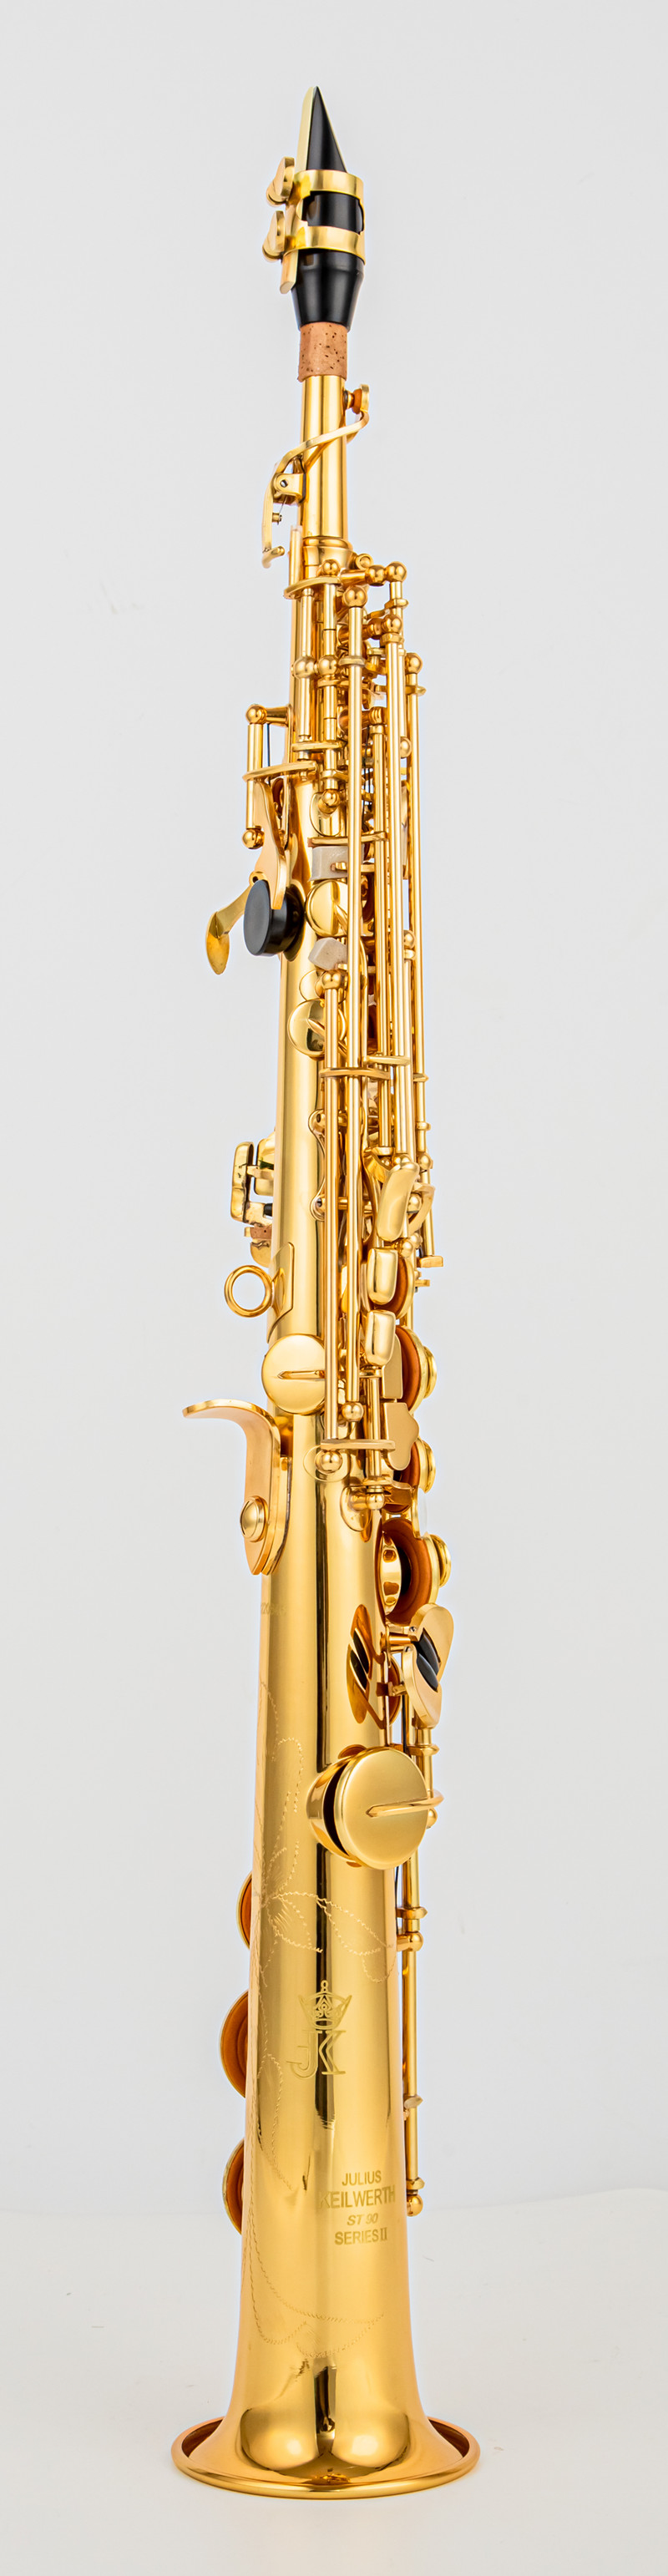 JK Keilwerth SX90II Soprano saksafon altın nikel B düz soprano düz iki boyun, kasa, ağızlık, eldiven, saz